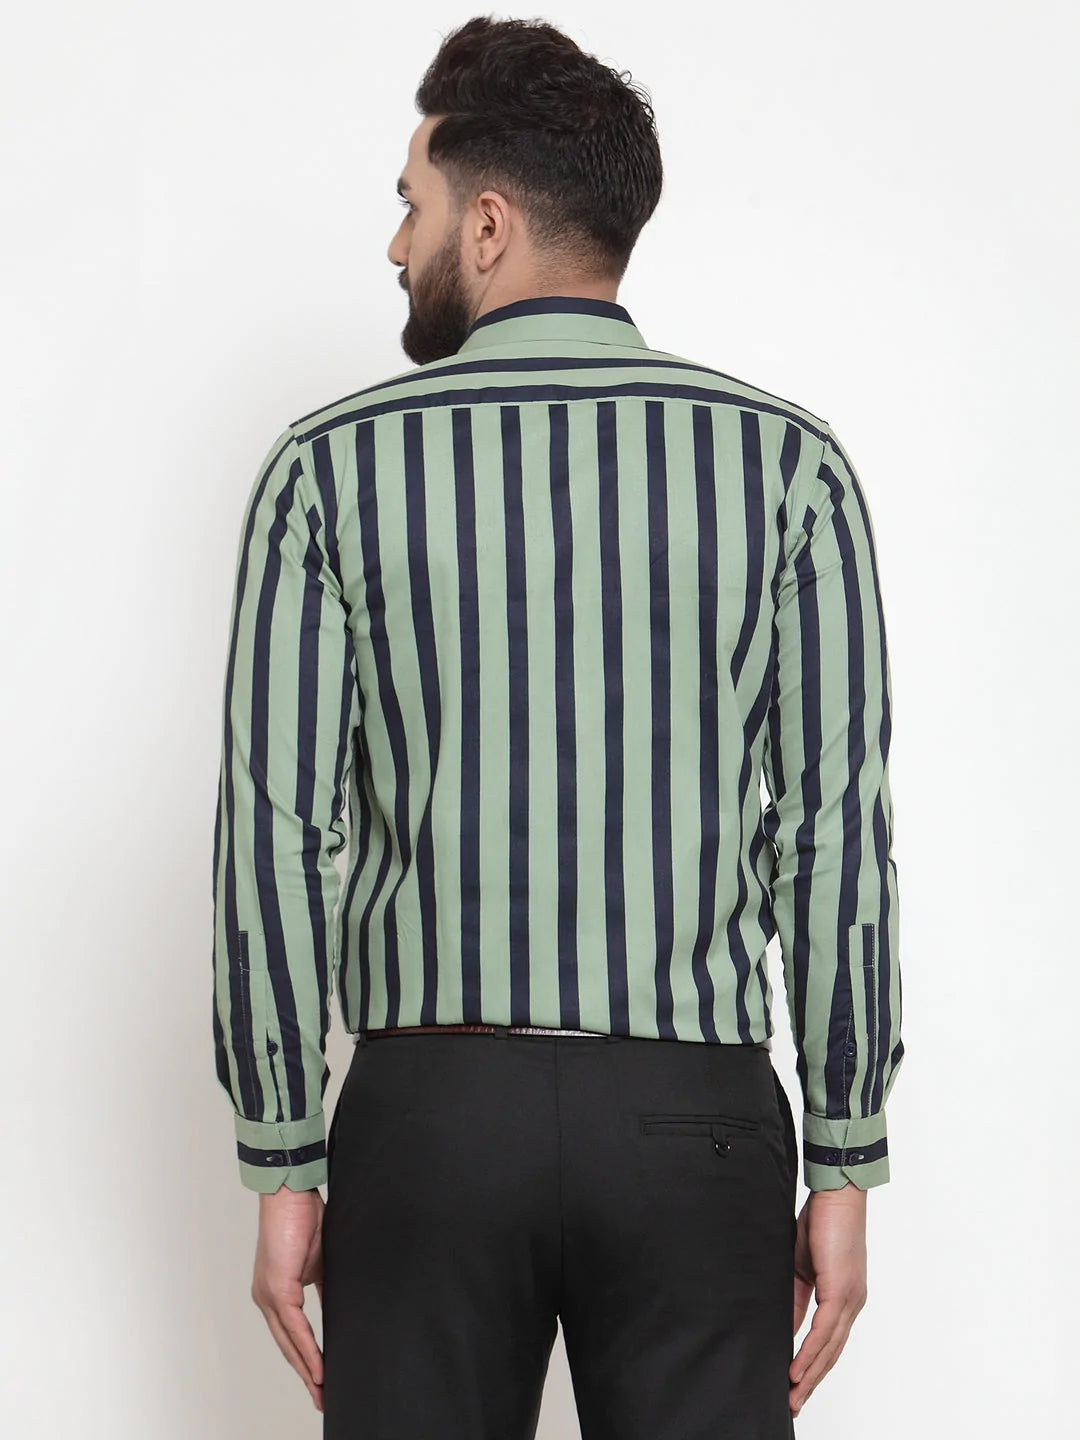 Jainish Green Men's Cotton Striped Formal Shirts ( SF 744Green )